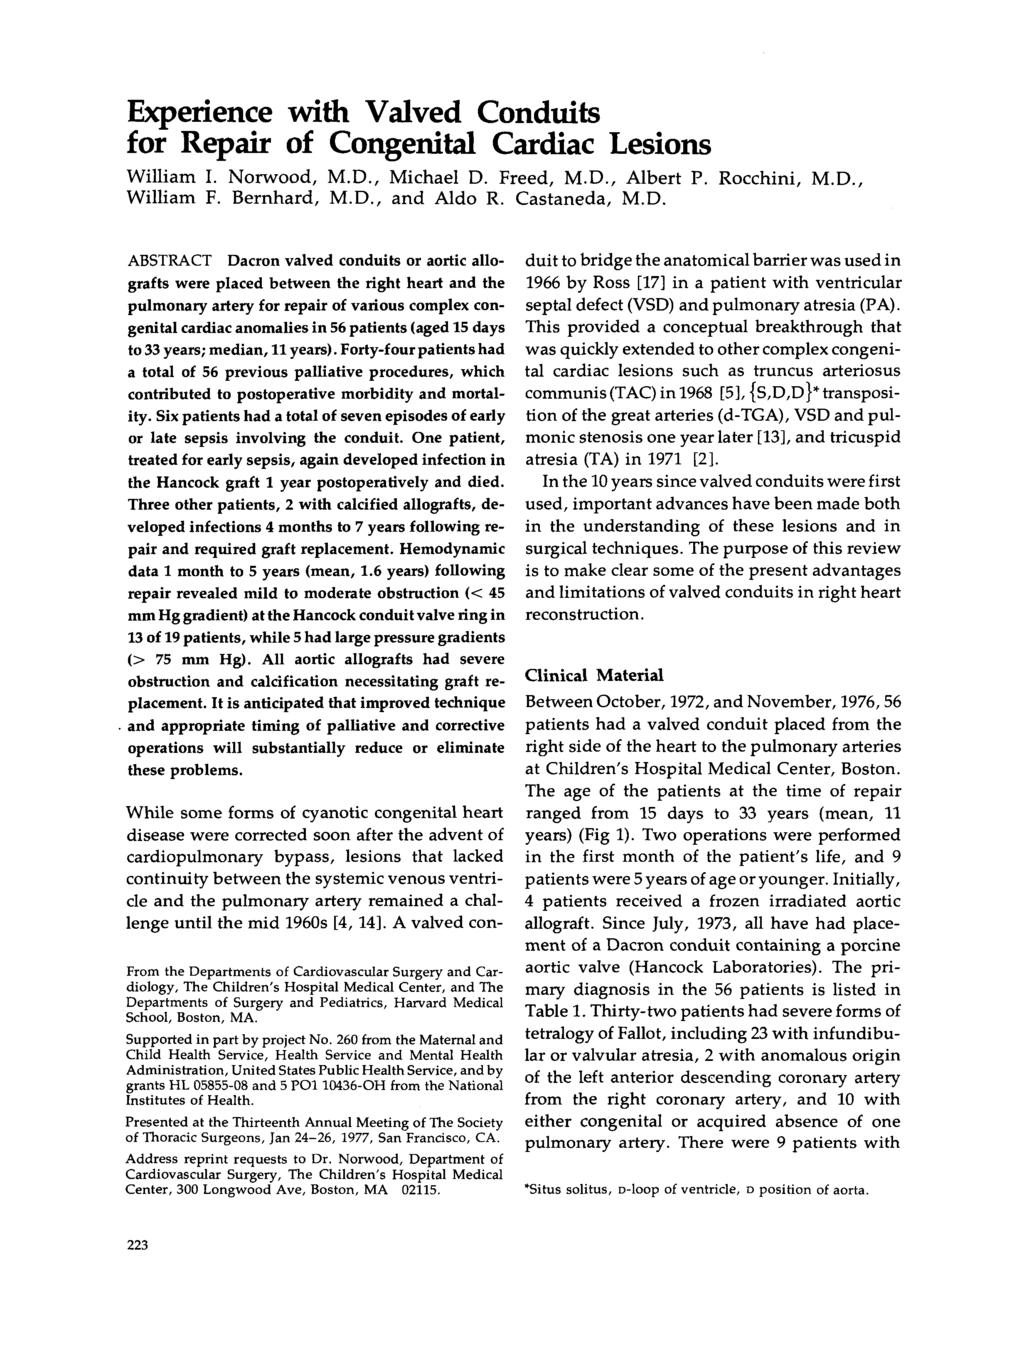 Experience with Valved Conduits for Repair of Congenital Cardiac Lesions William I. Nonvood, M.D., Michael D. Freed, M.D., Albert I?. Rocchini, M.D., William F. Bernhard, M.D., and Aldo R.